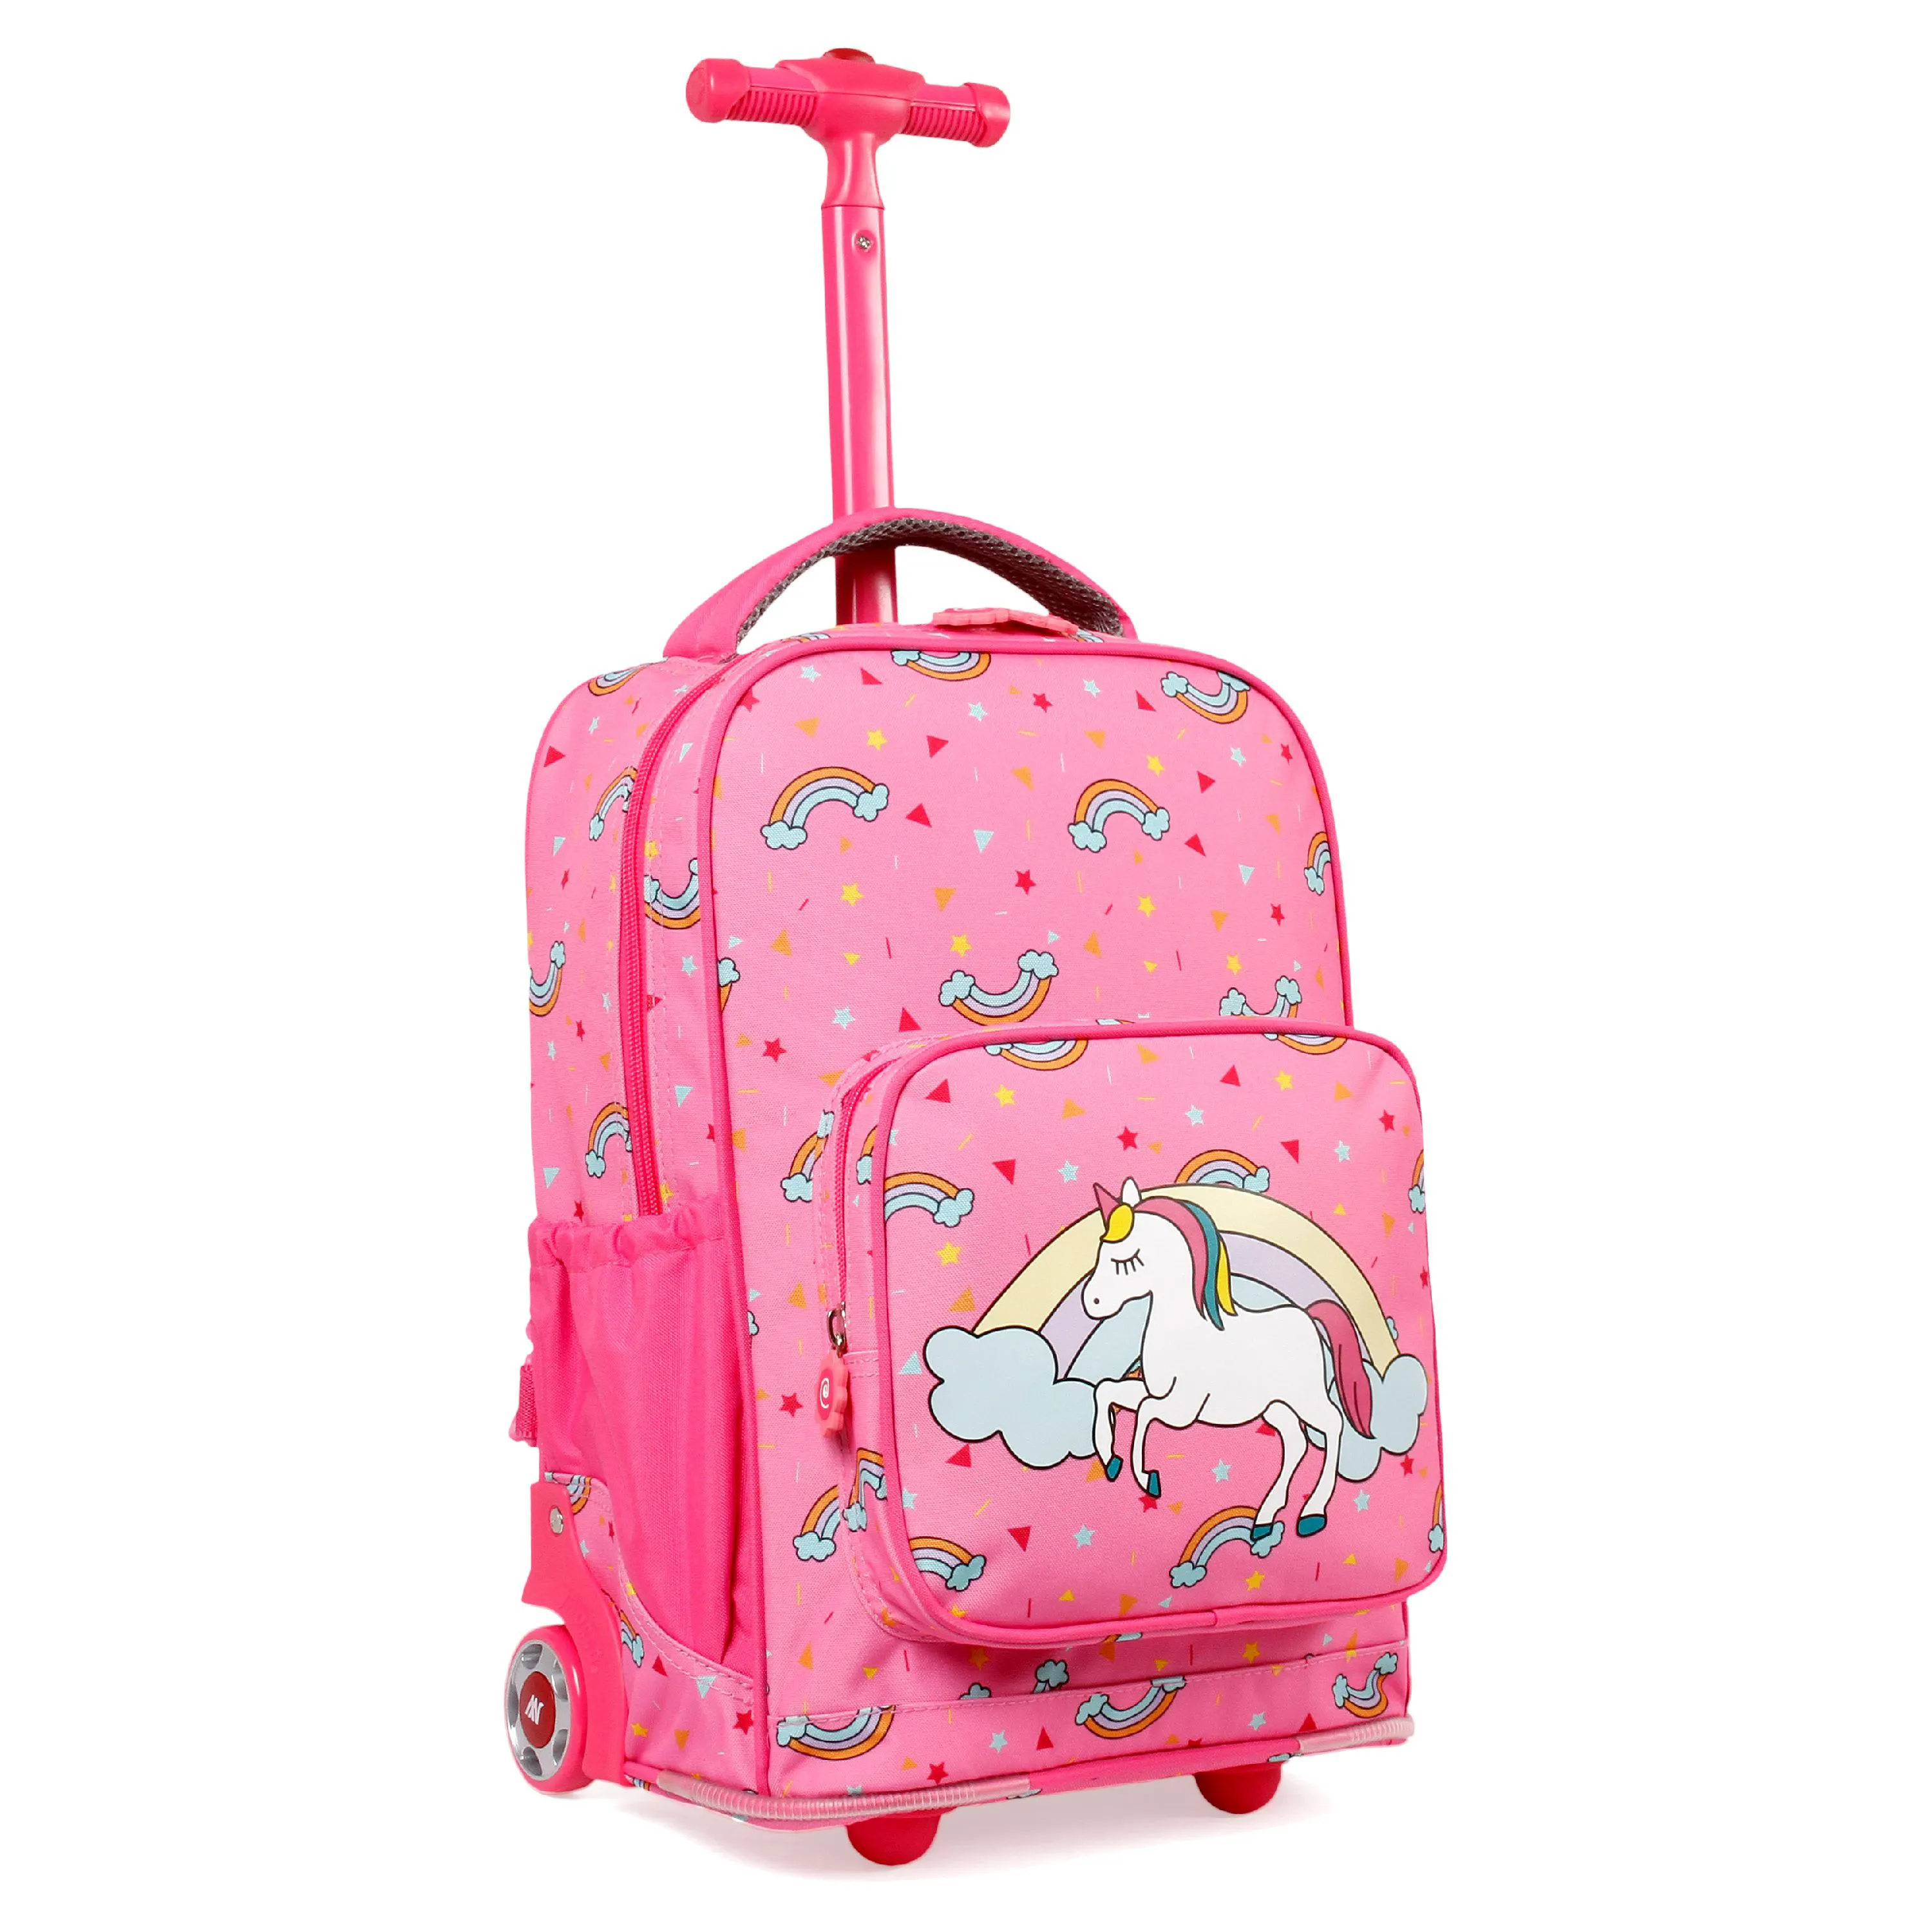 15inch One Single Unicorn Cartoon Kids Trolley Bag School Wheeled Backpack School Rolling Backpack with Wheels for girls